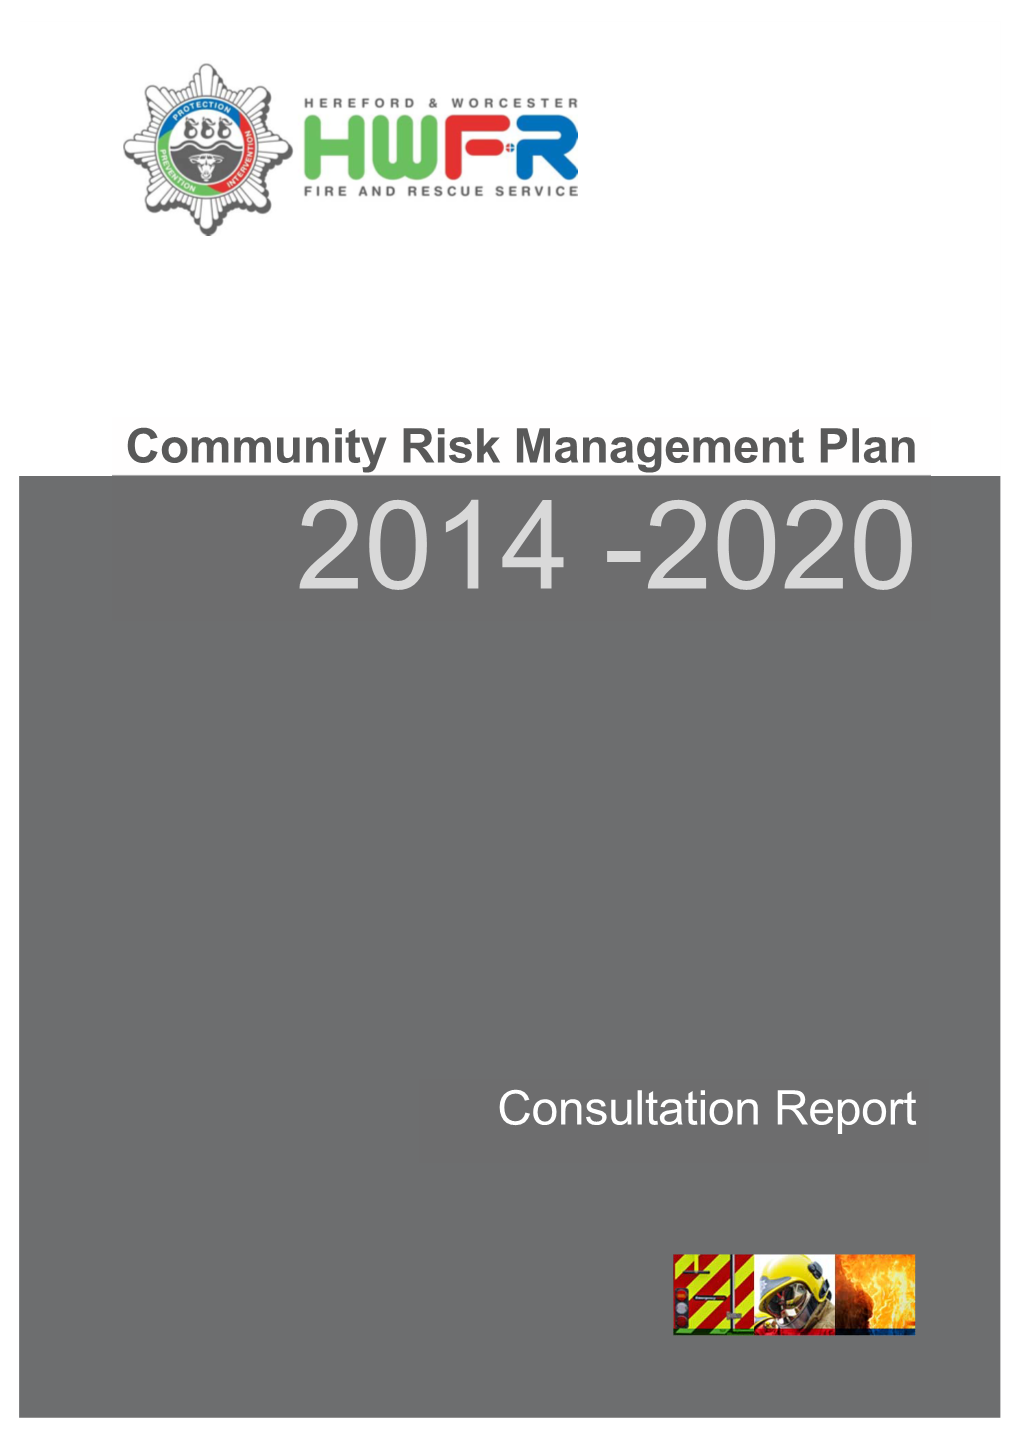 Consultation Report for the CRMP 2014-20